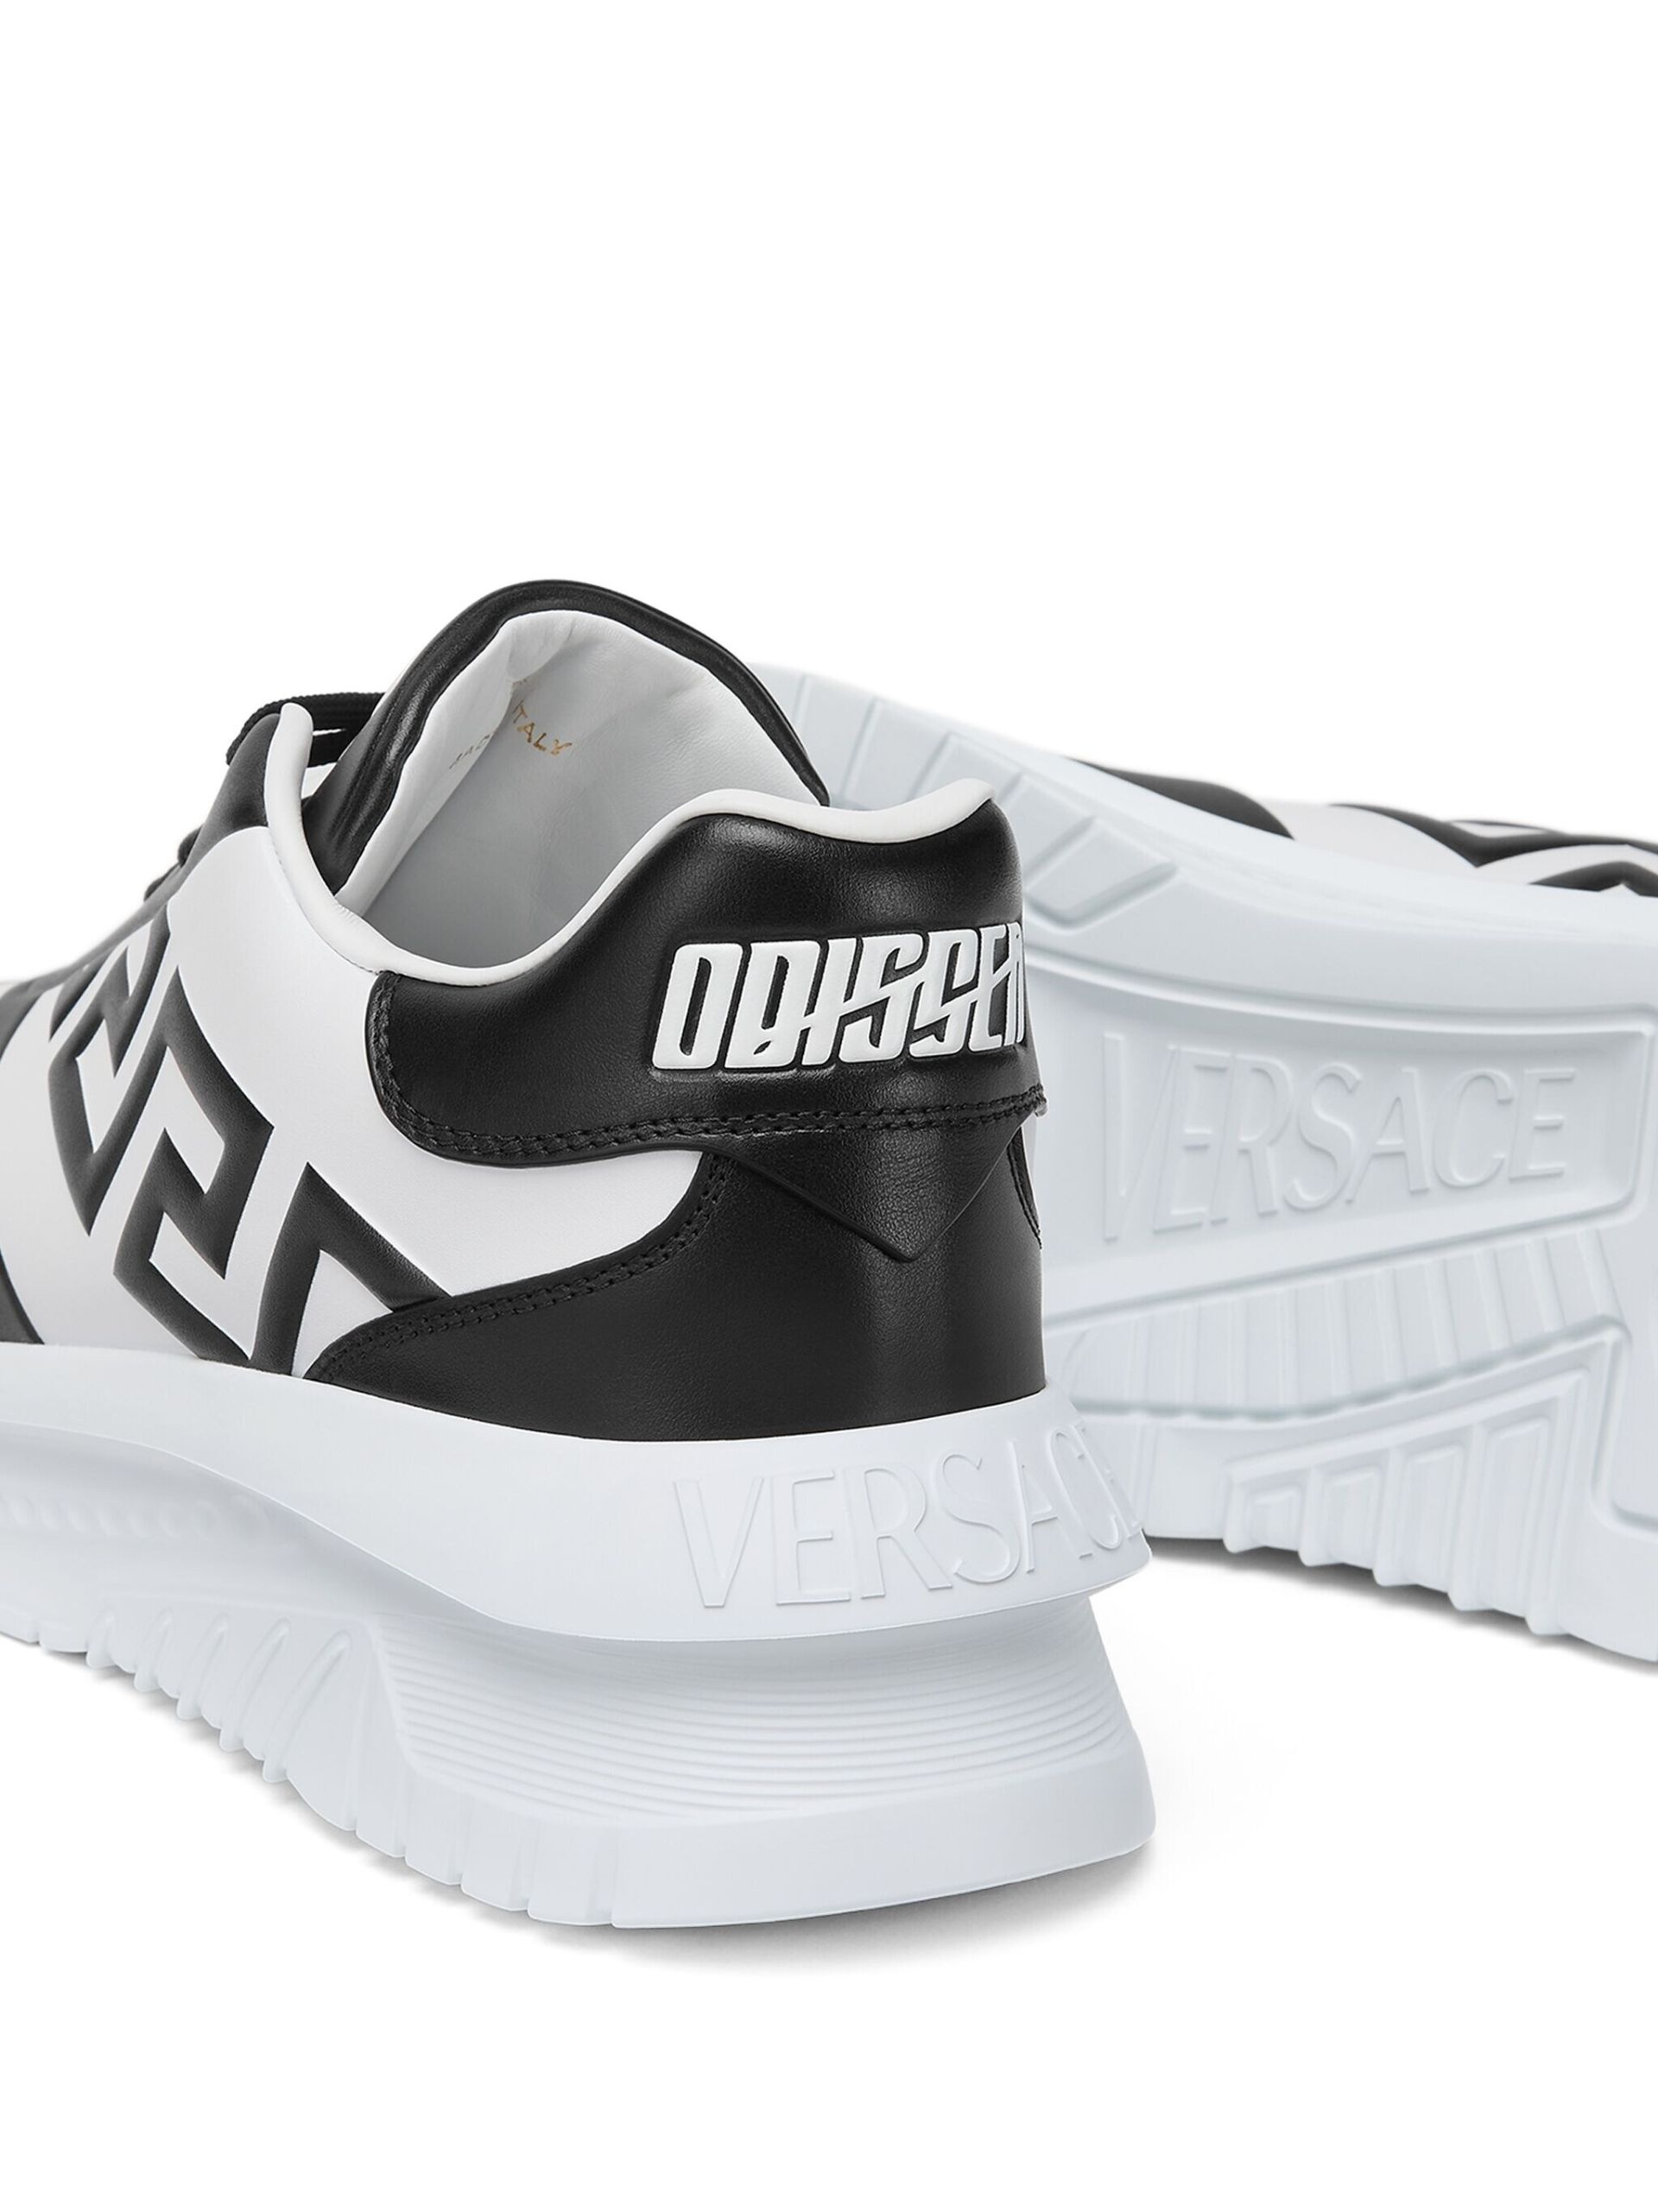 Black Greca Odissea Leather Sneakers - 3